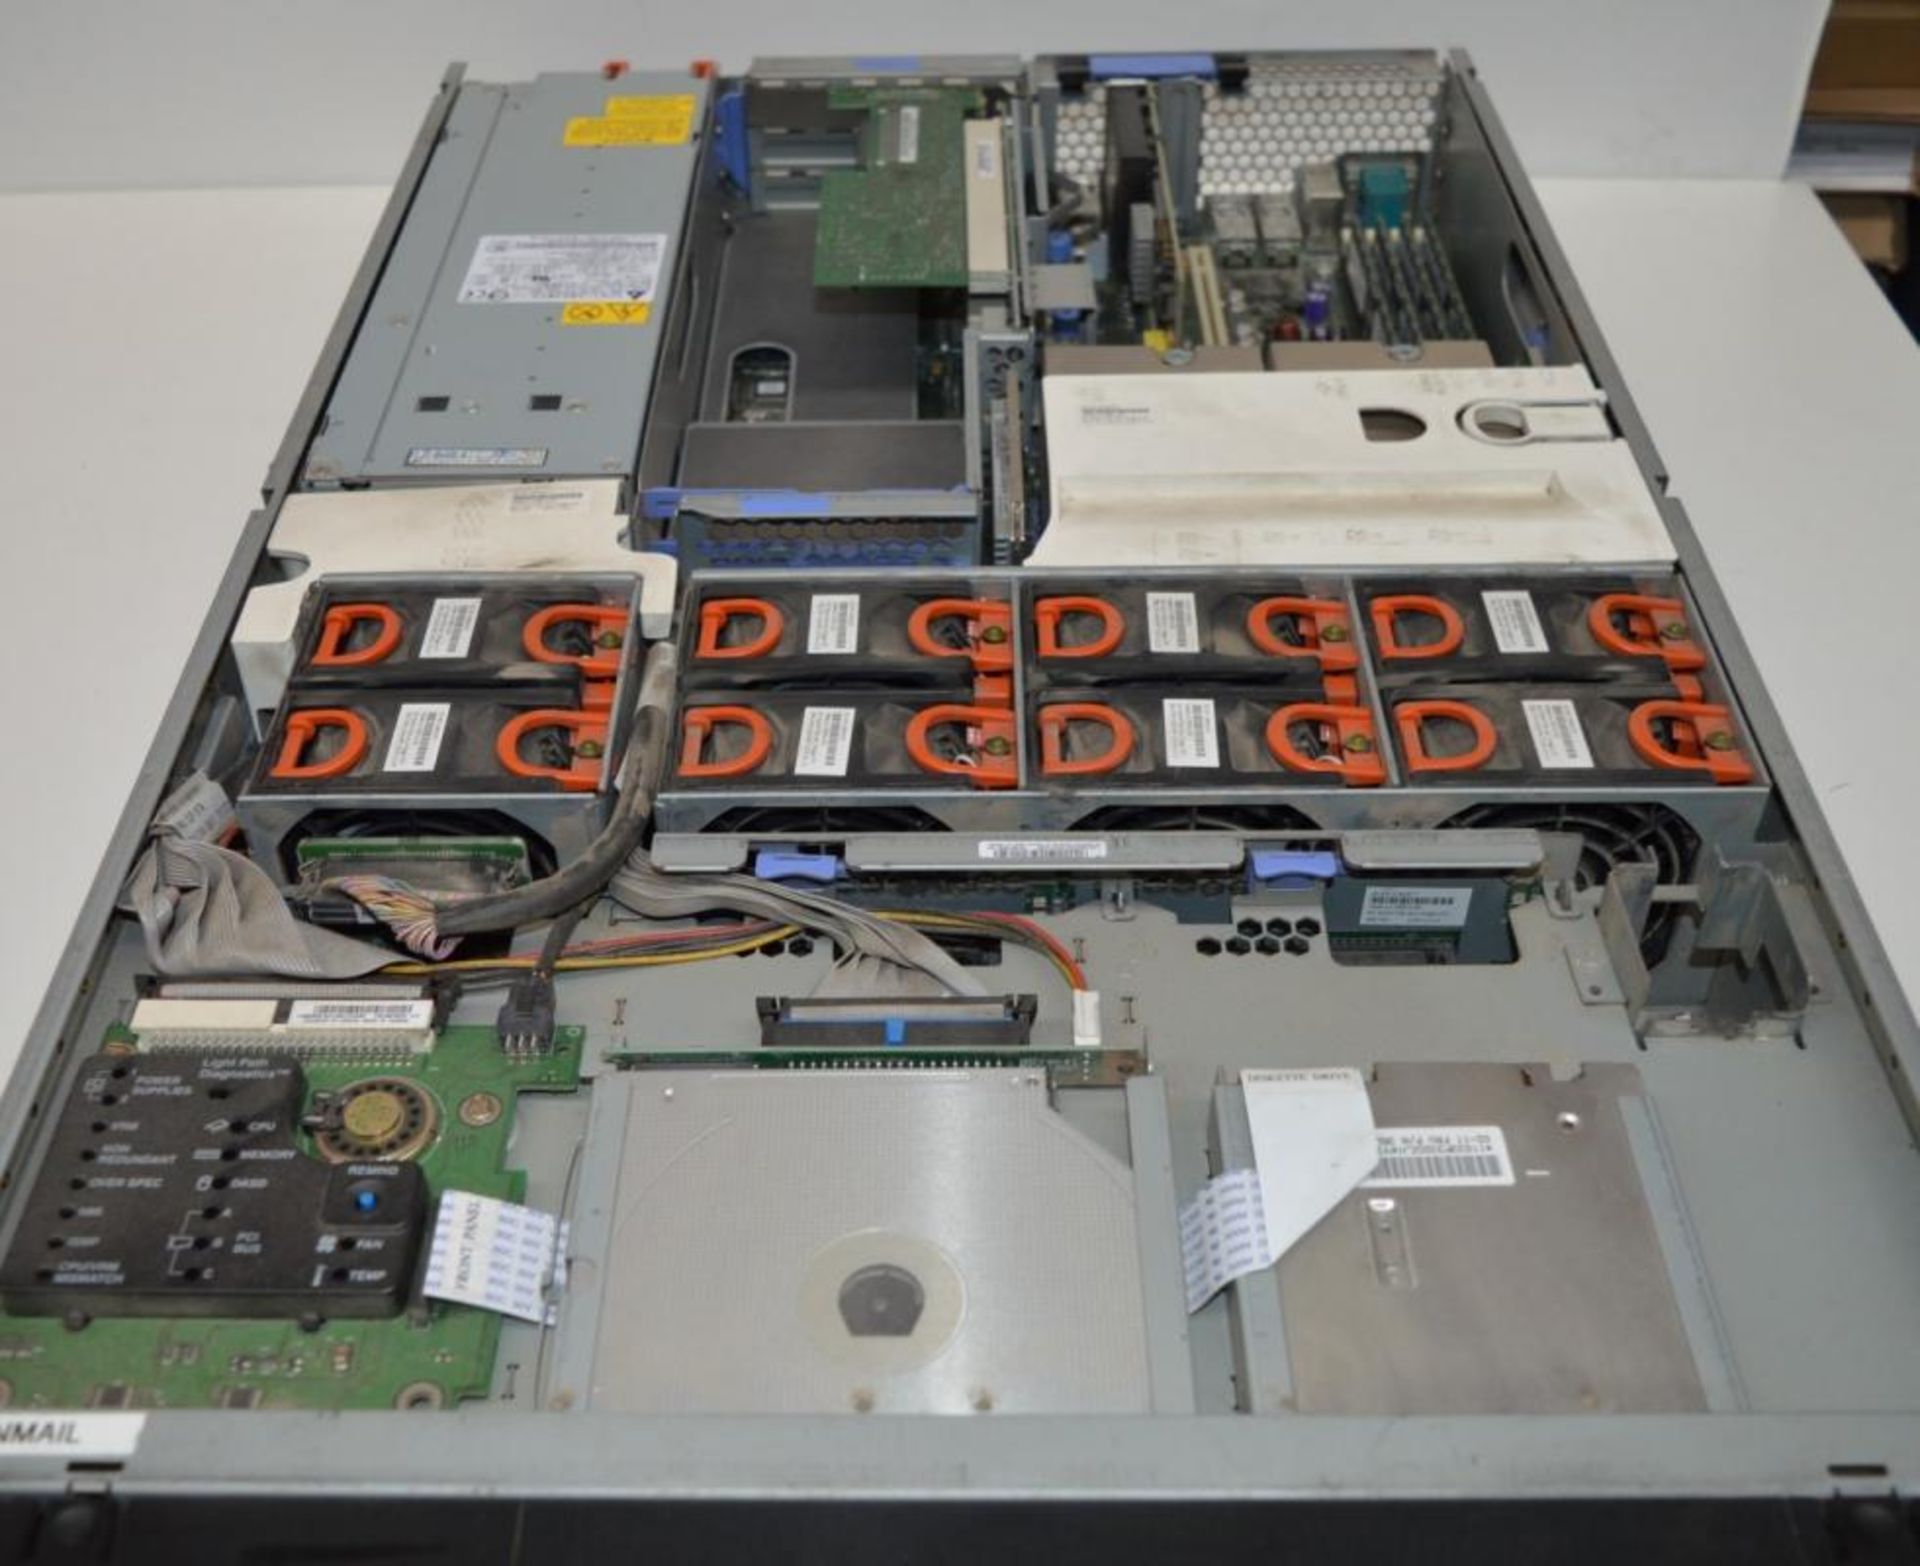 1 x IBM xSeries 345 Server - Includes Dual Xeon Processors, 1gb Ram, Raid Card - Hard Disk Drives - Image 5 of 6